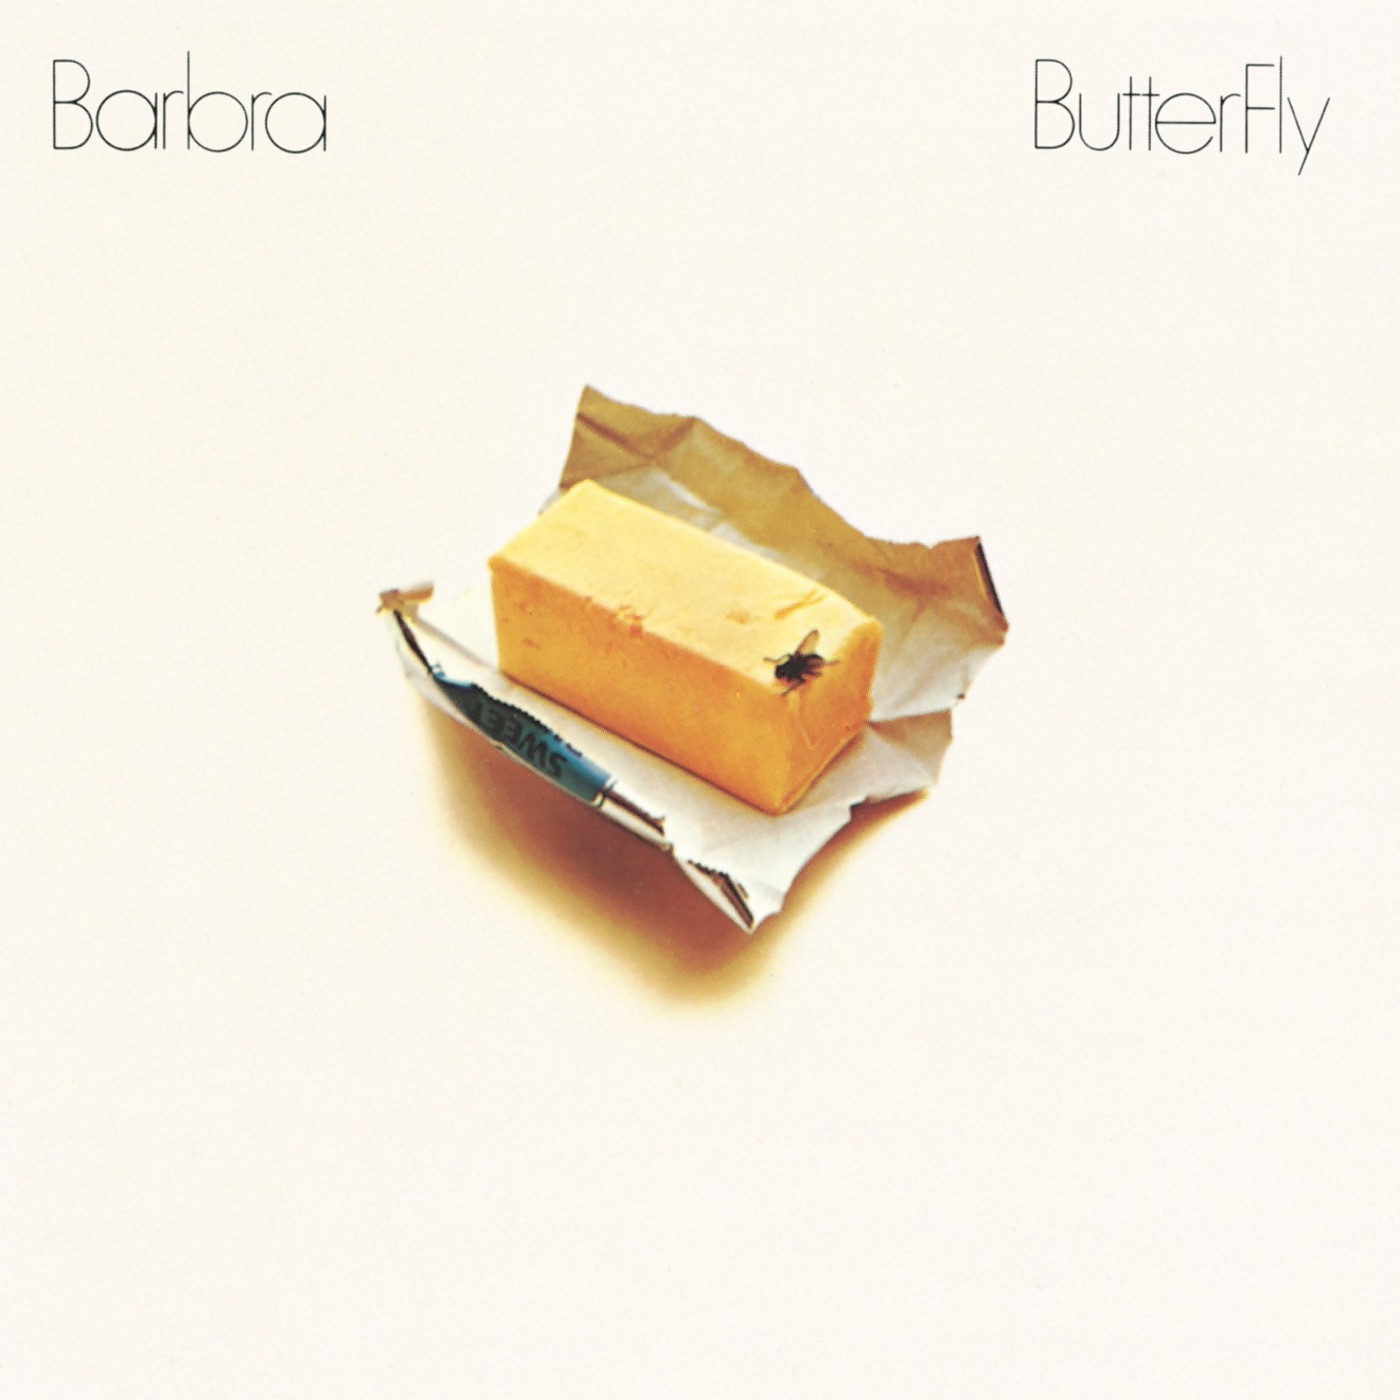 Butterfly by Barbra Streisand